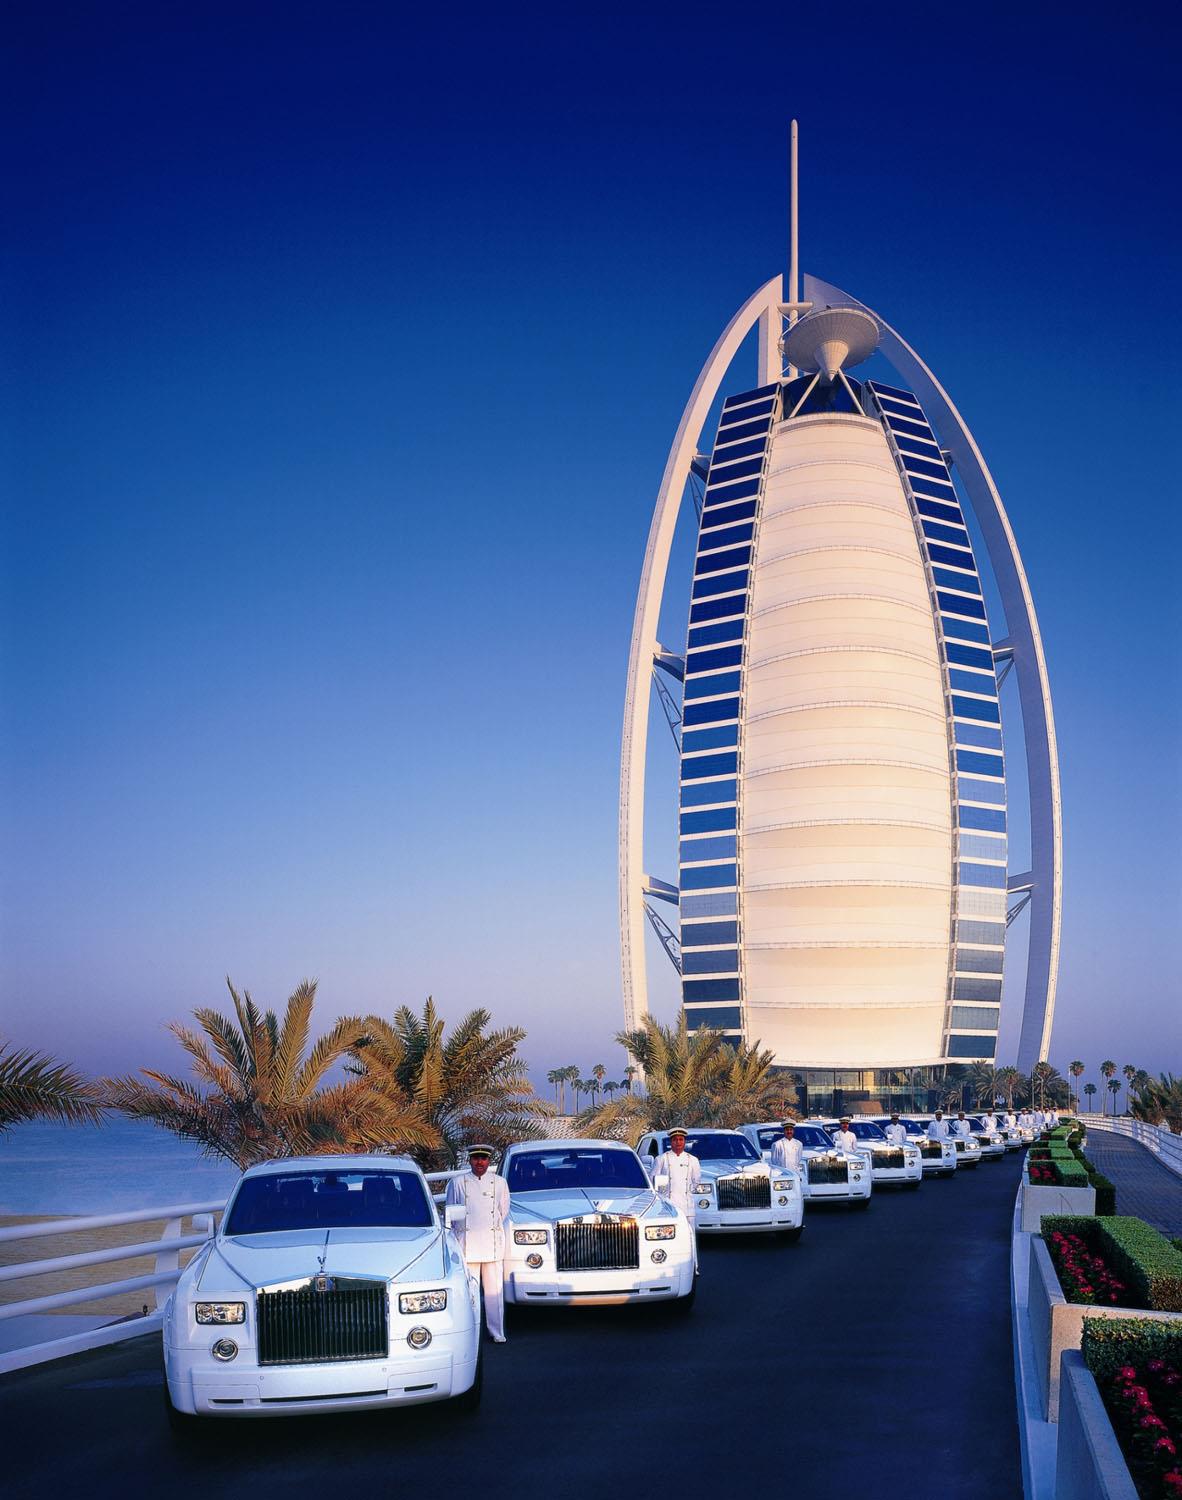 Rolls Royce Phantoms fleet at the Burj al Arab